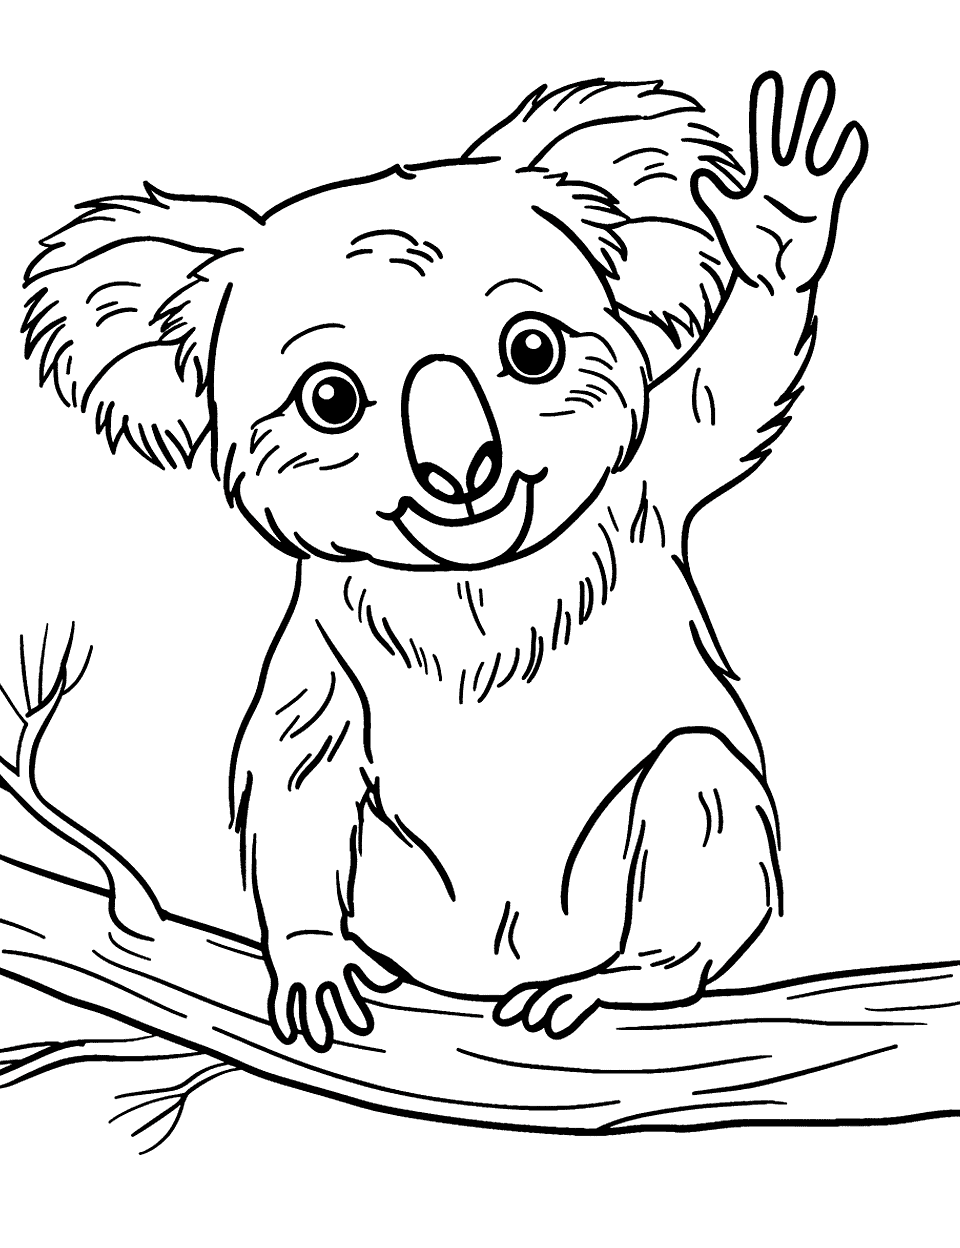 Friendly Koala Waving Coloring Page - A koala raising its paw as if waving hello to its admirers.